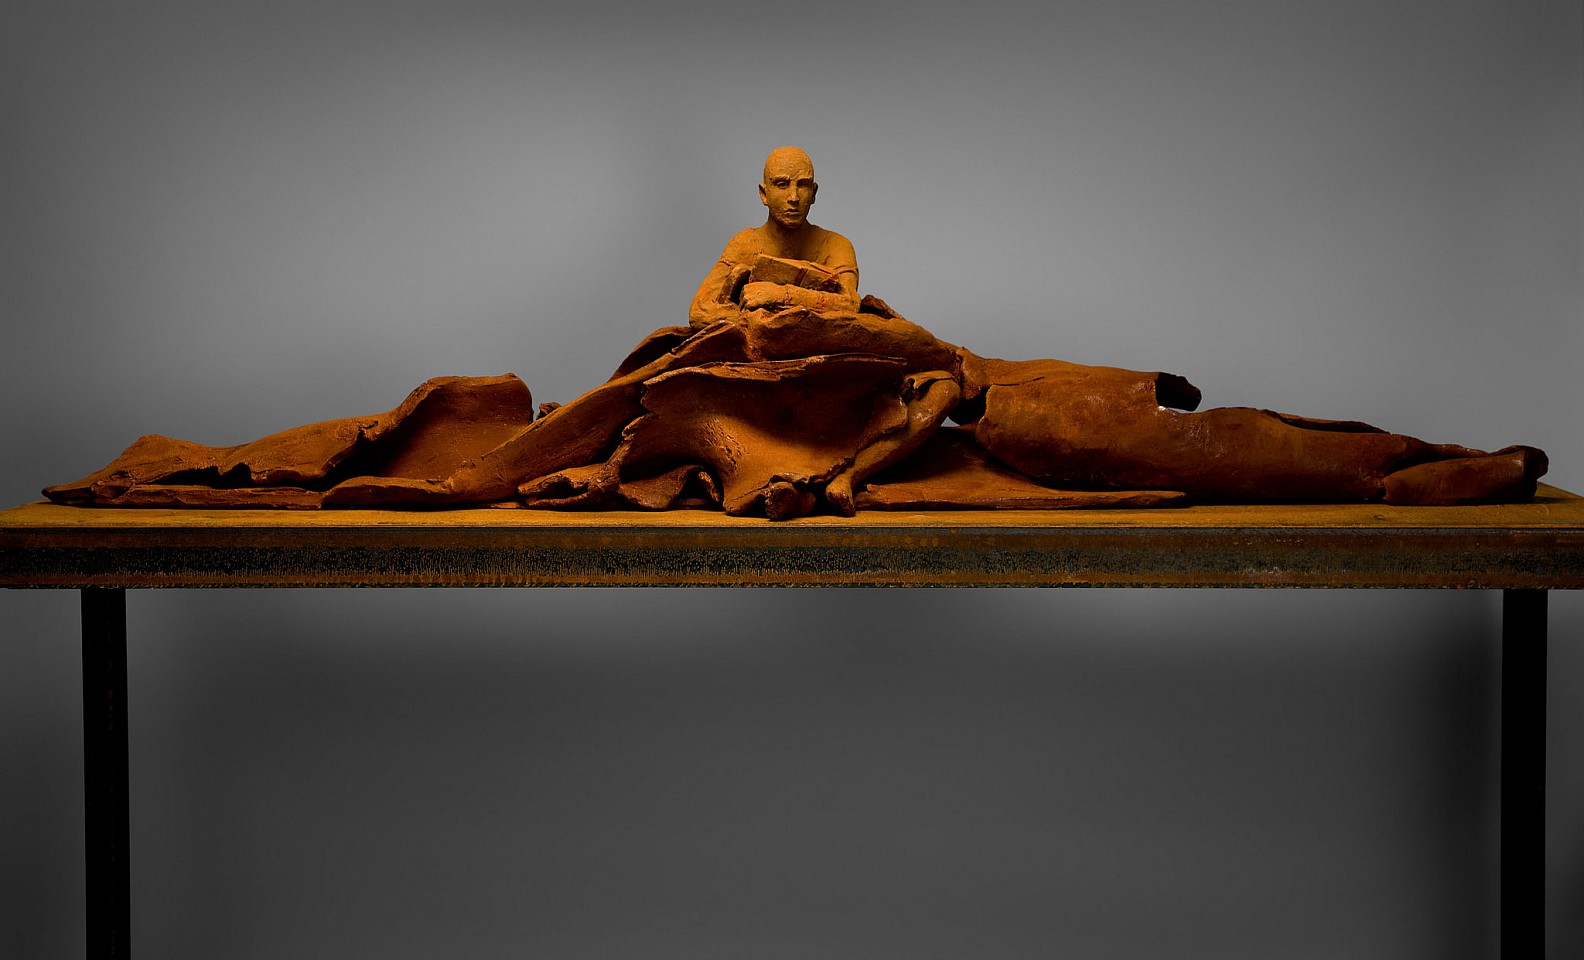 Hanneke Beaumont, Abundance and Chaos, 2009
Cast Iron Sculpture, 68 x 86.5 x 25.5 inches